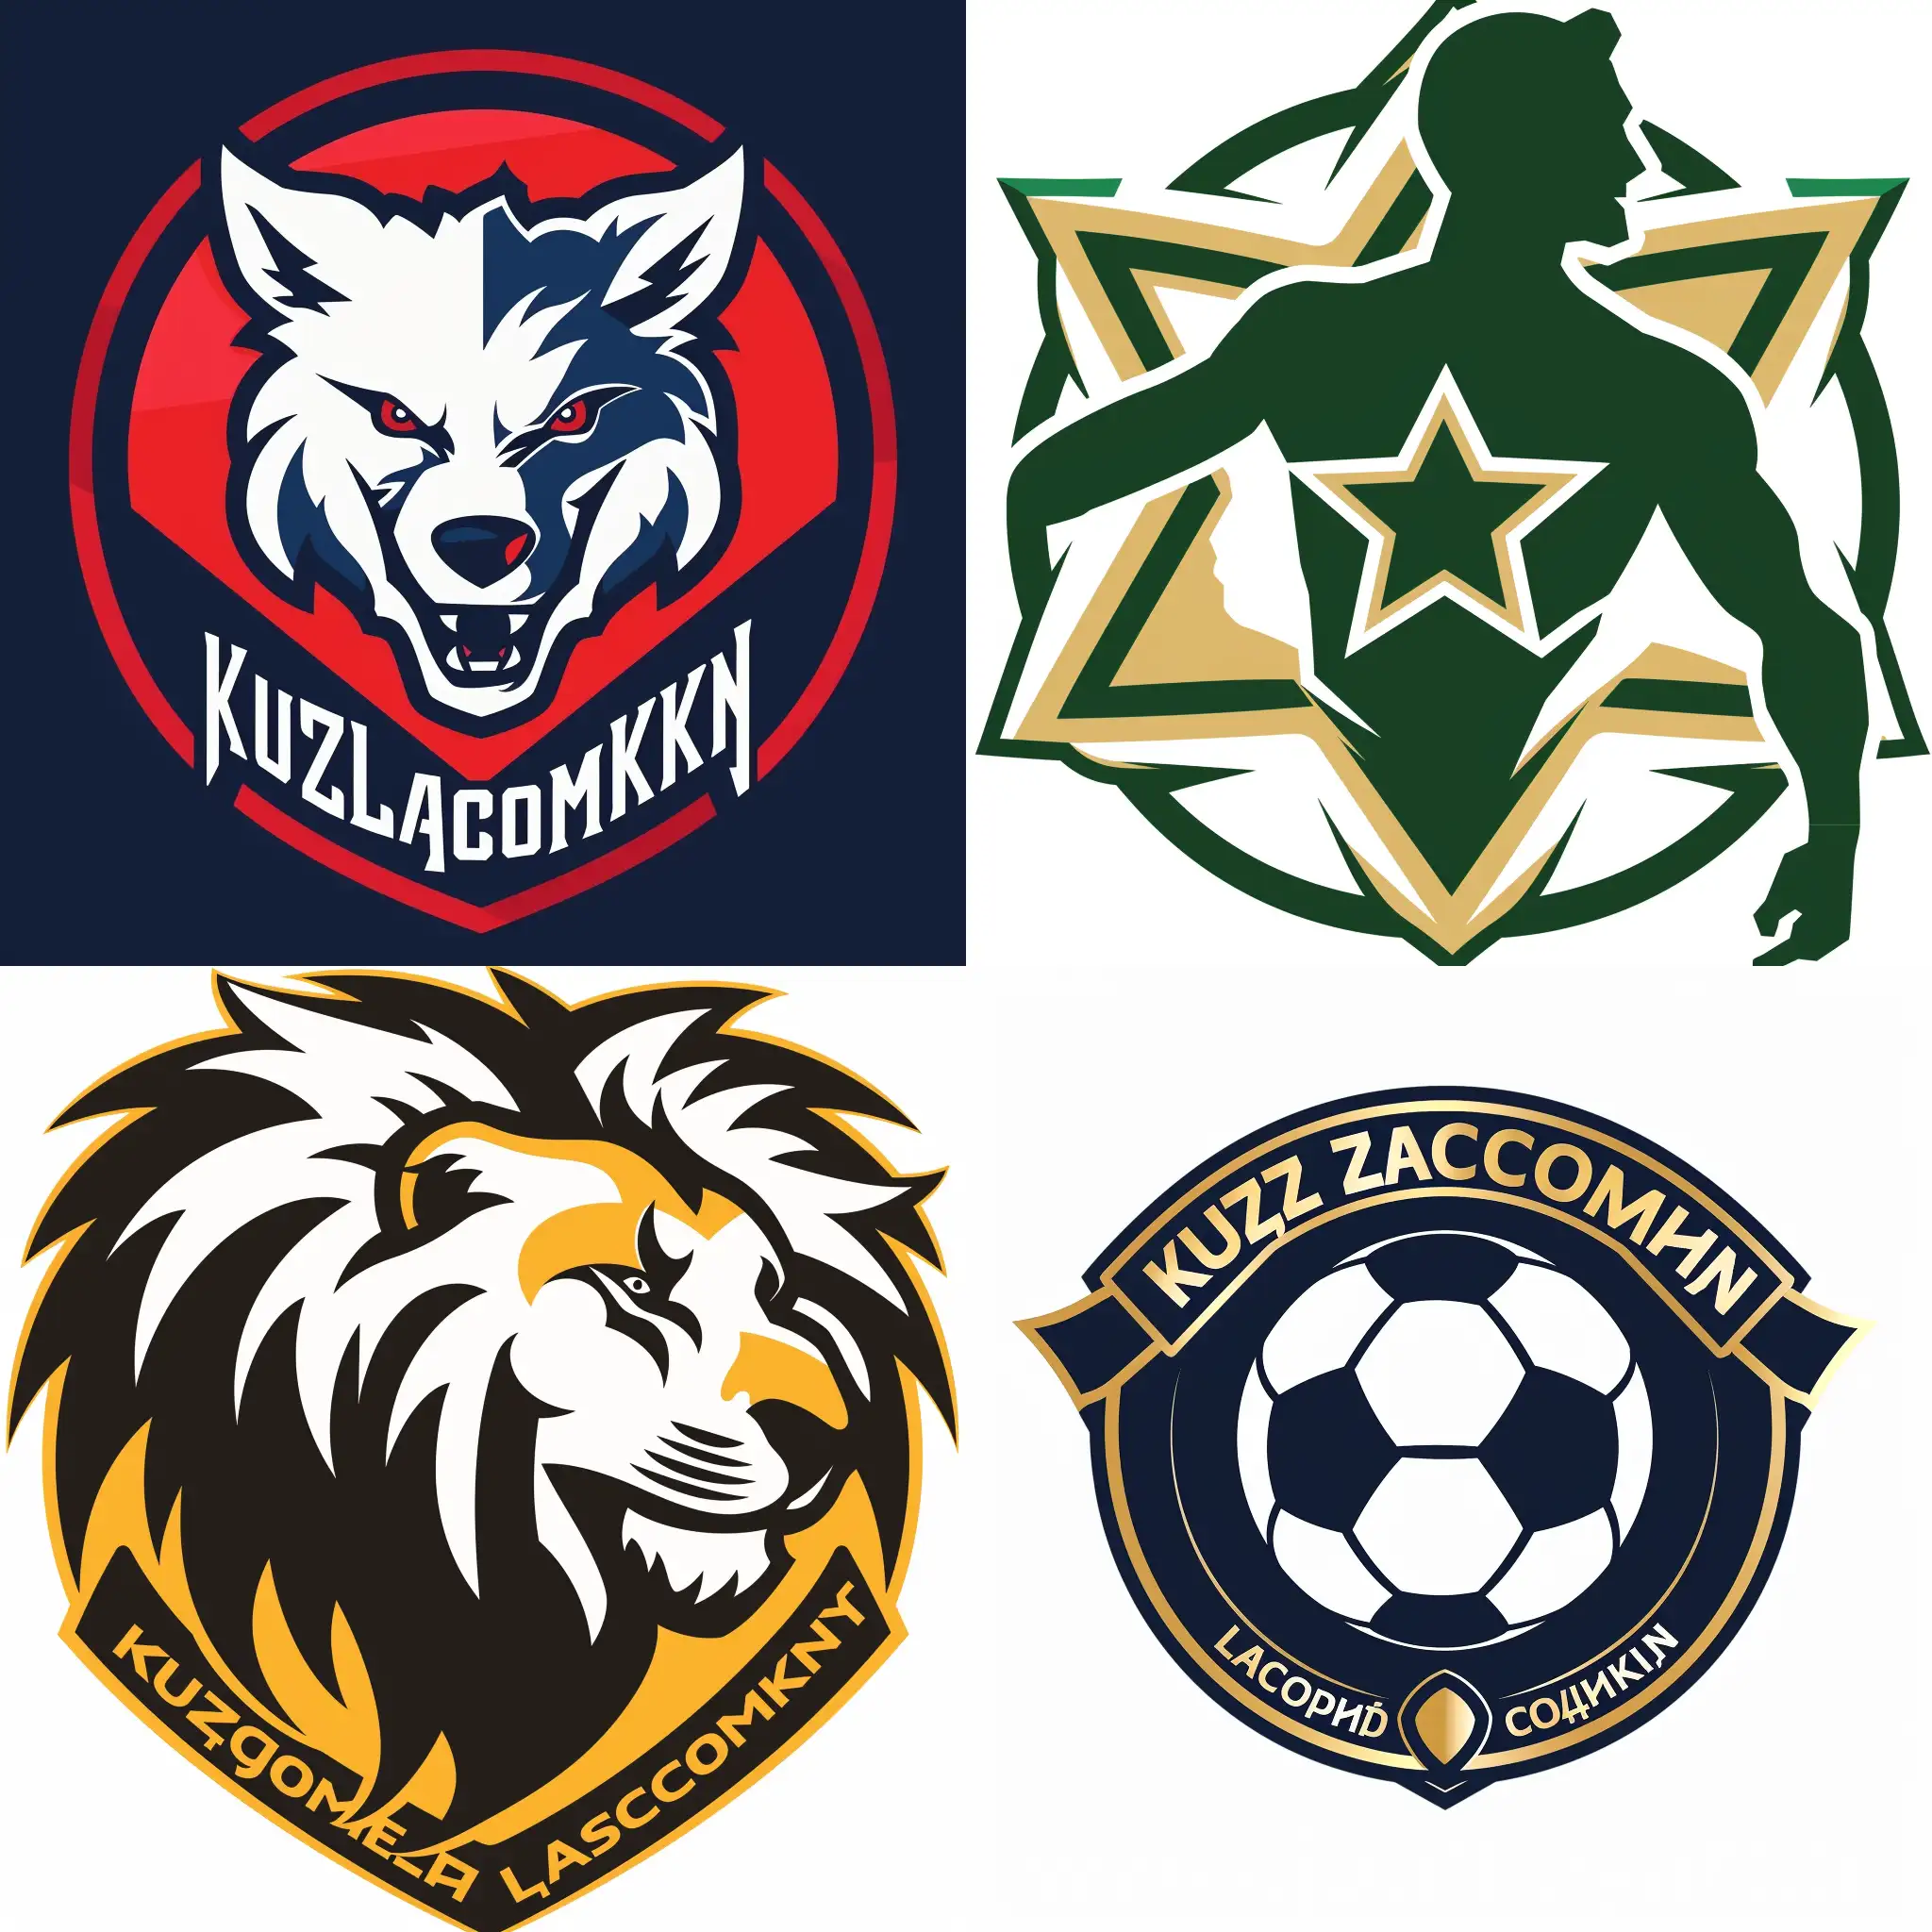 Dynamic-Kuzya-Lacomkin-Football-Club-Logo